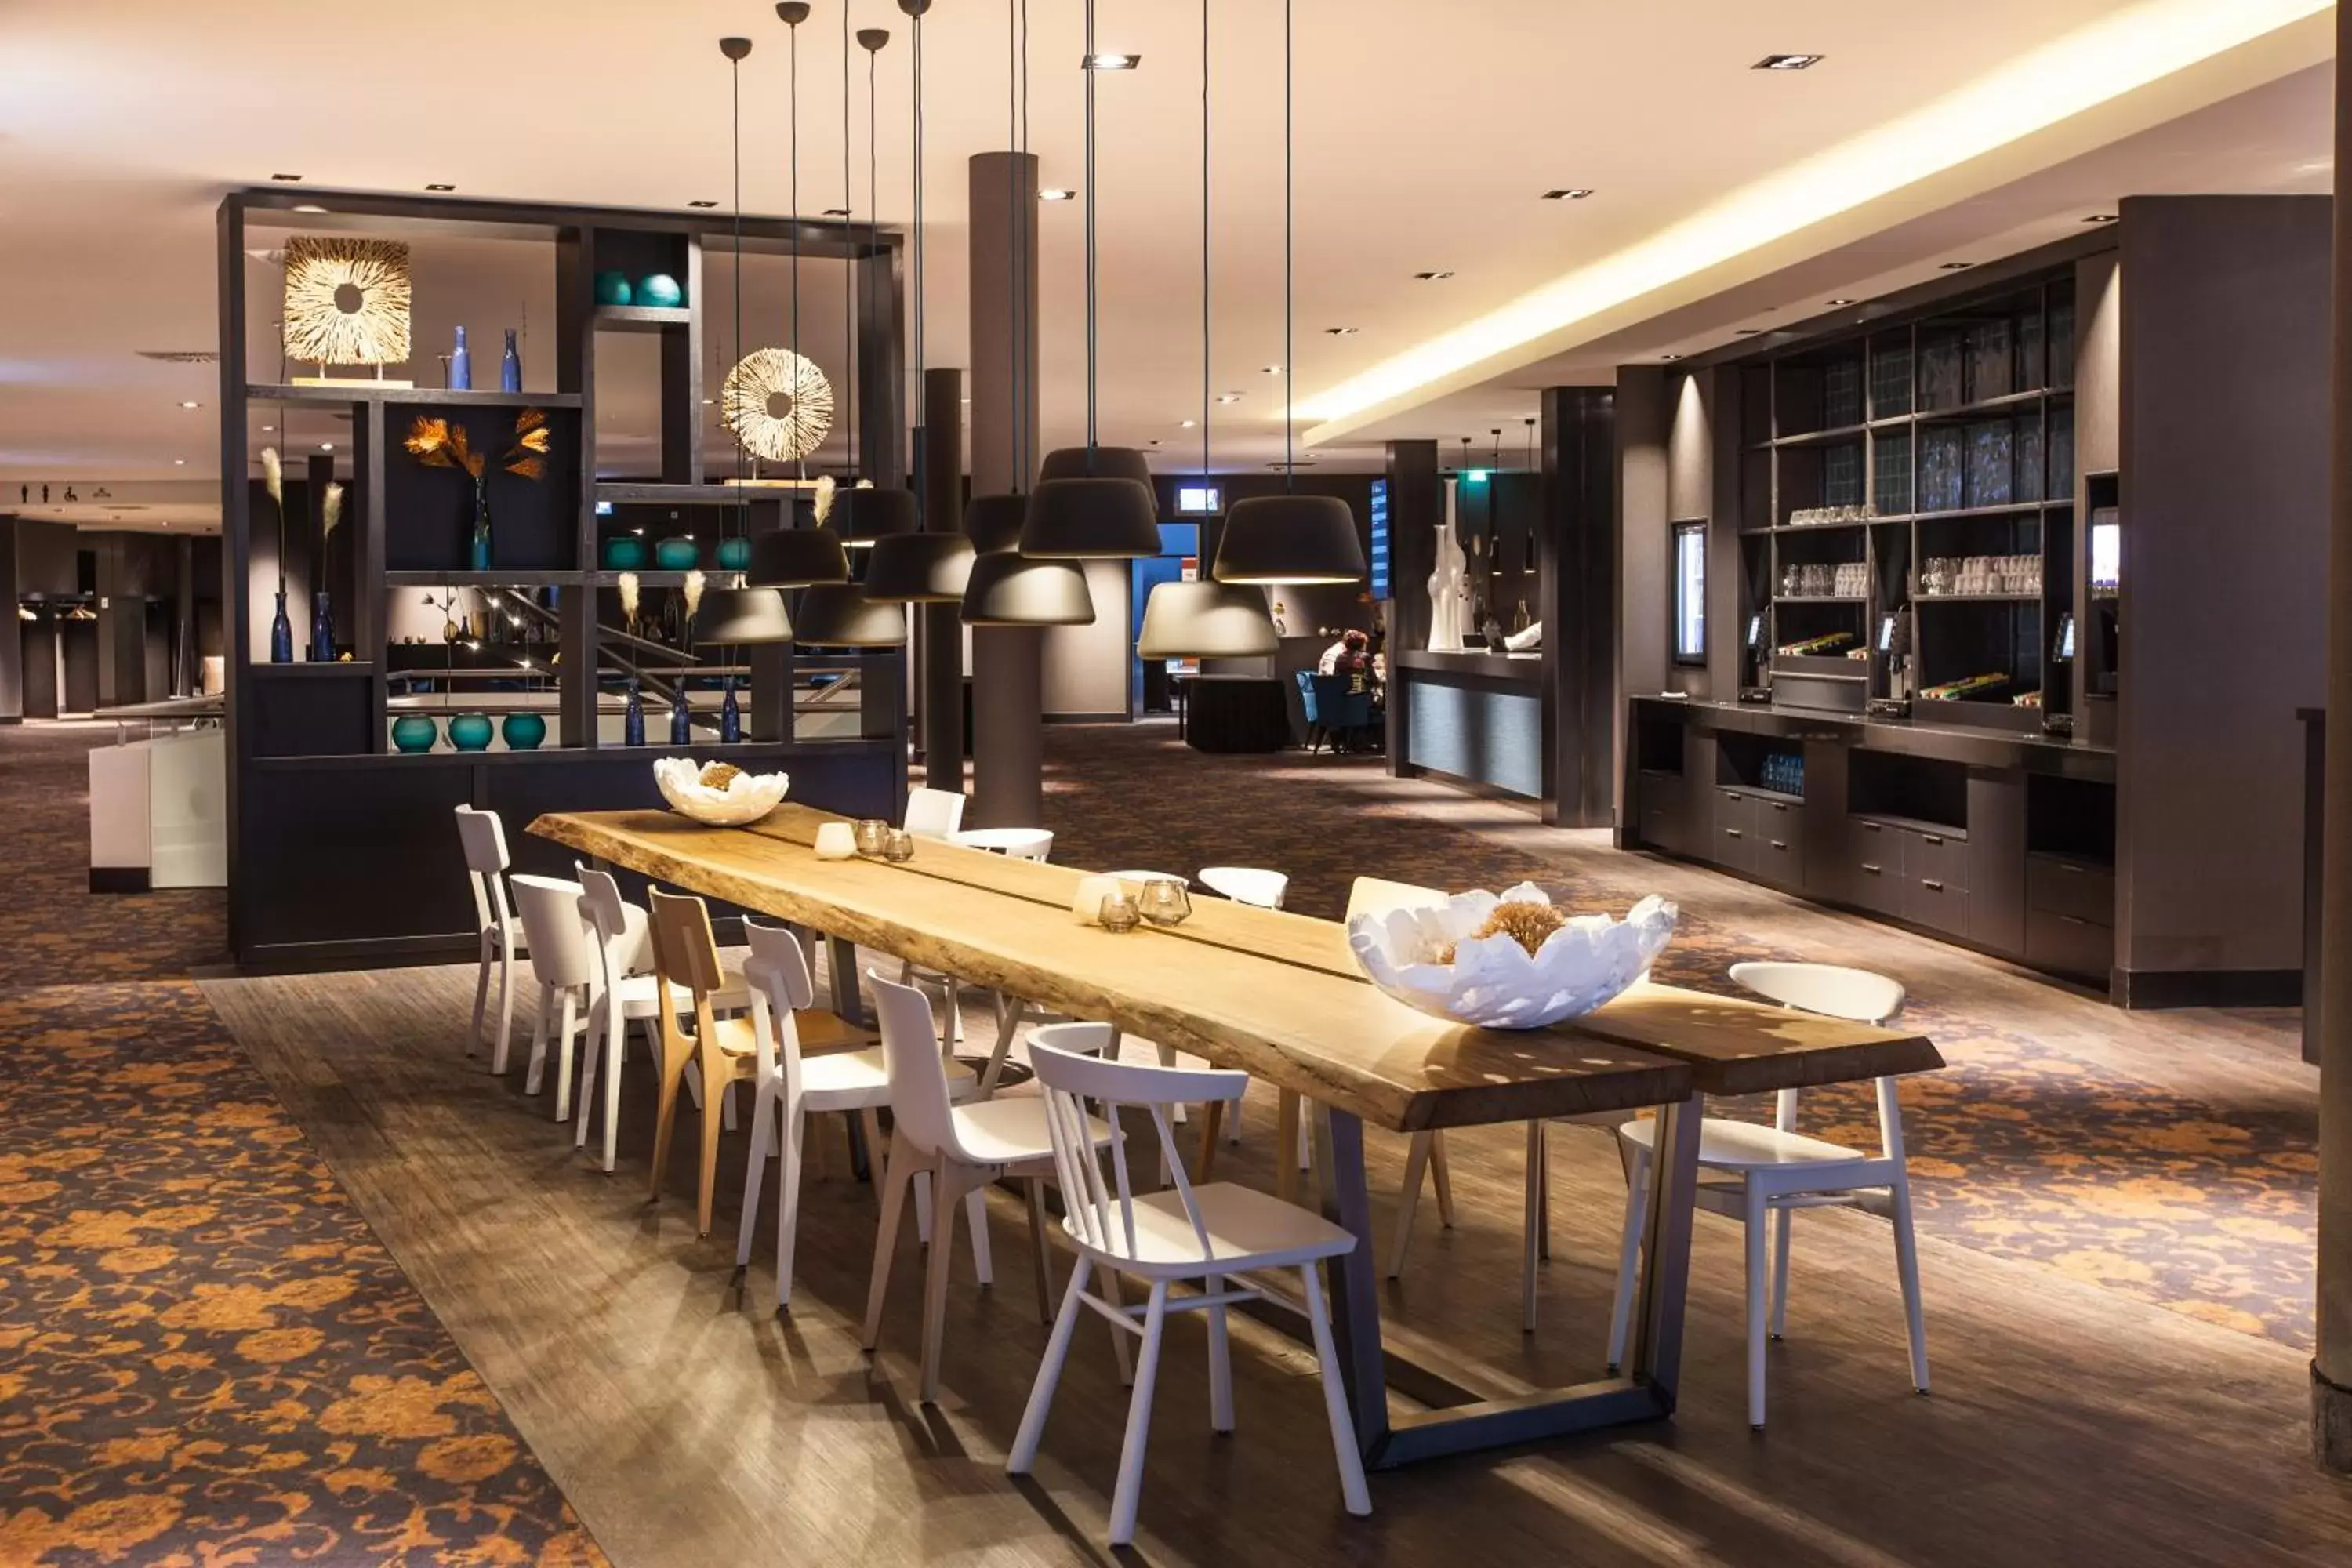 Business facilities, Restaurant/Places to Eat in Van der Valk hotel Veenendaal